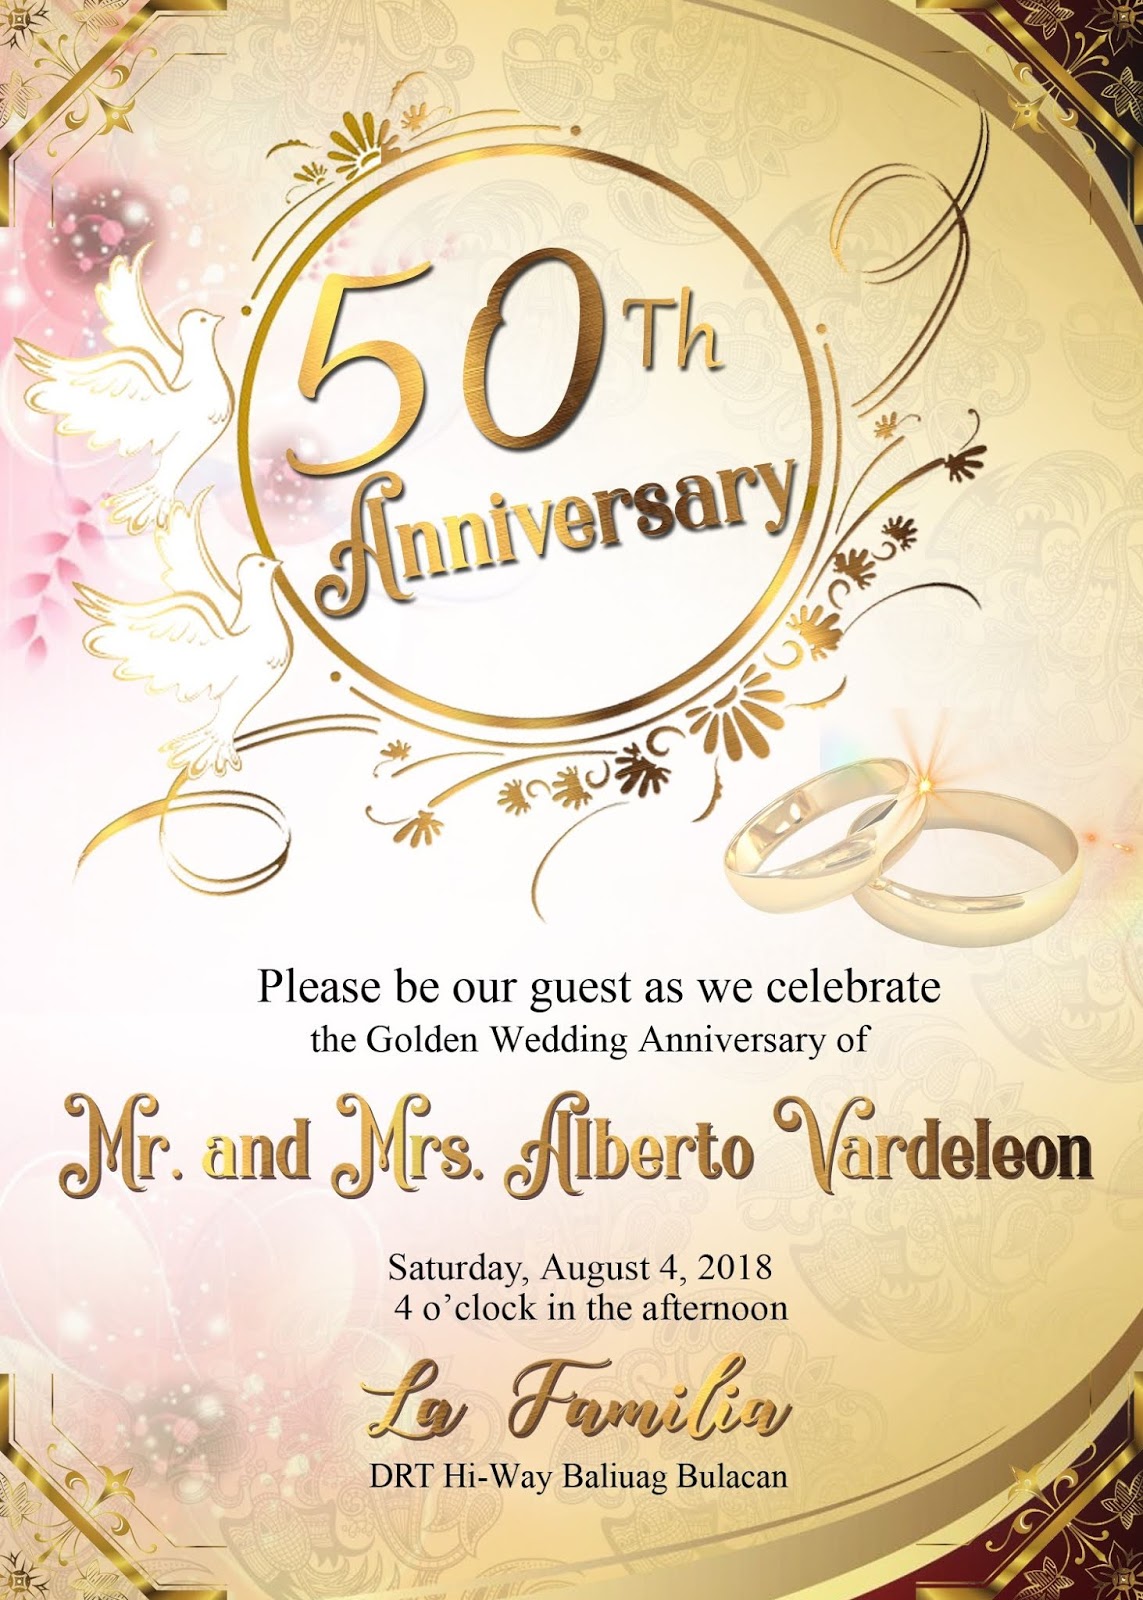 50th wedding anniversary sample invitation card Get Layout